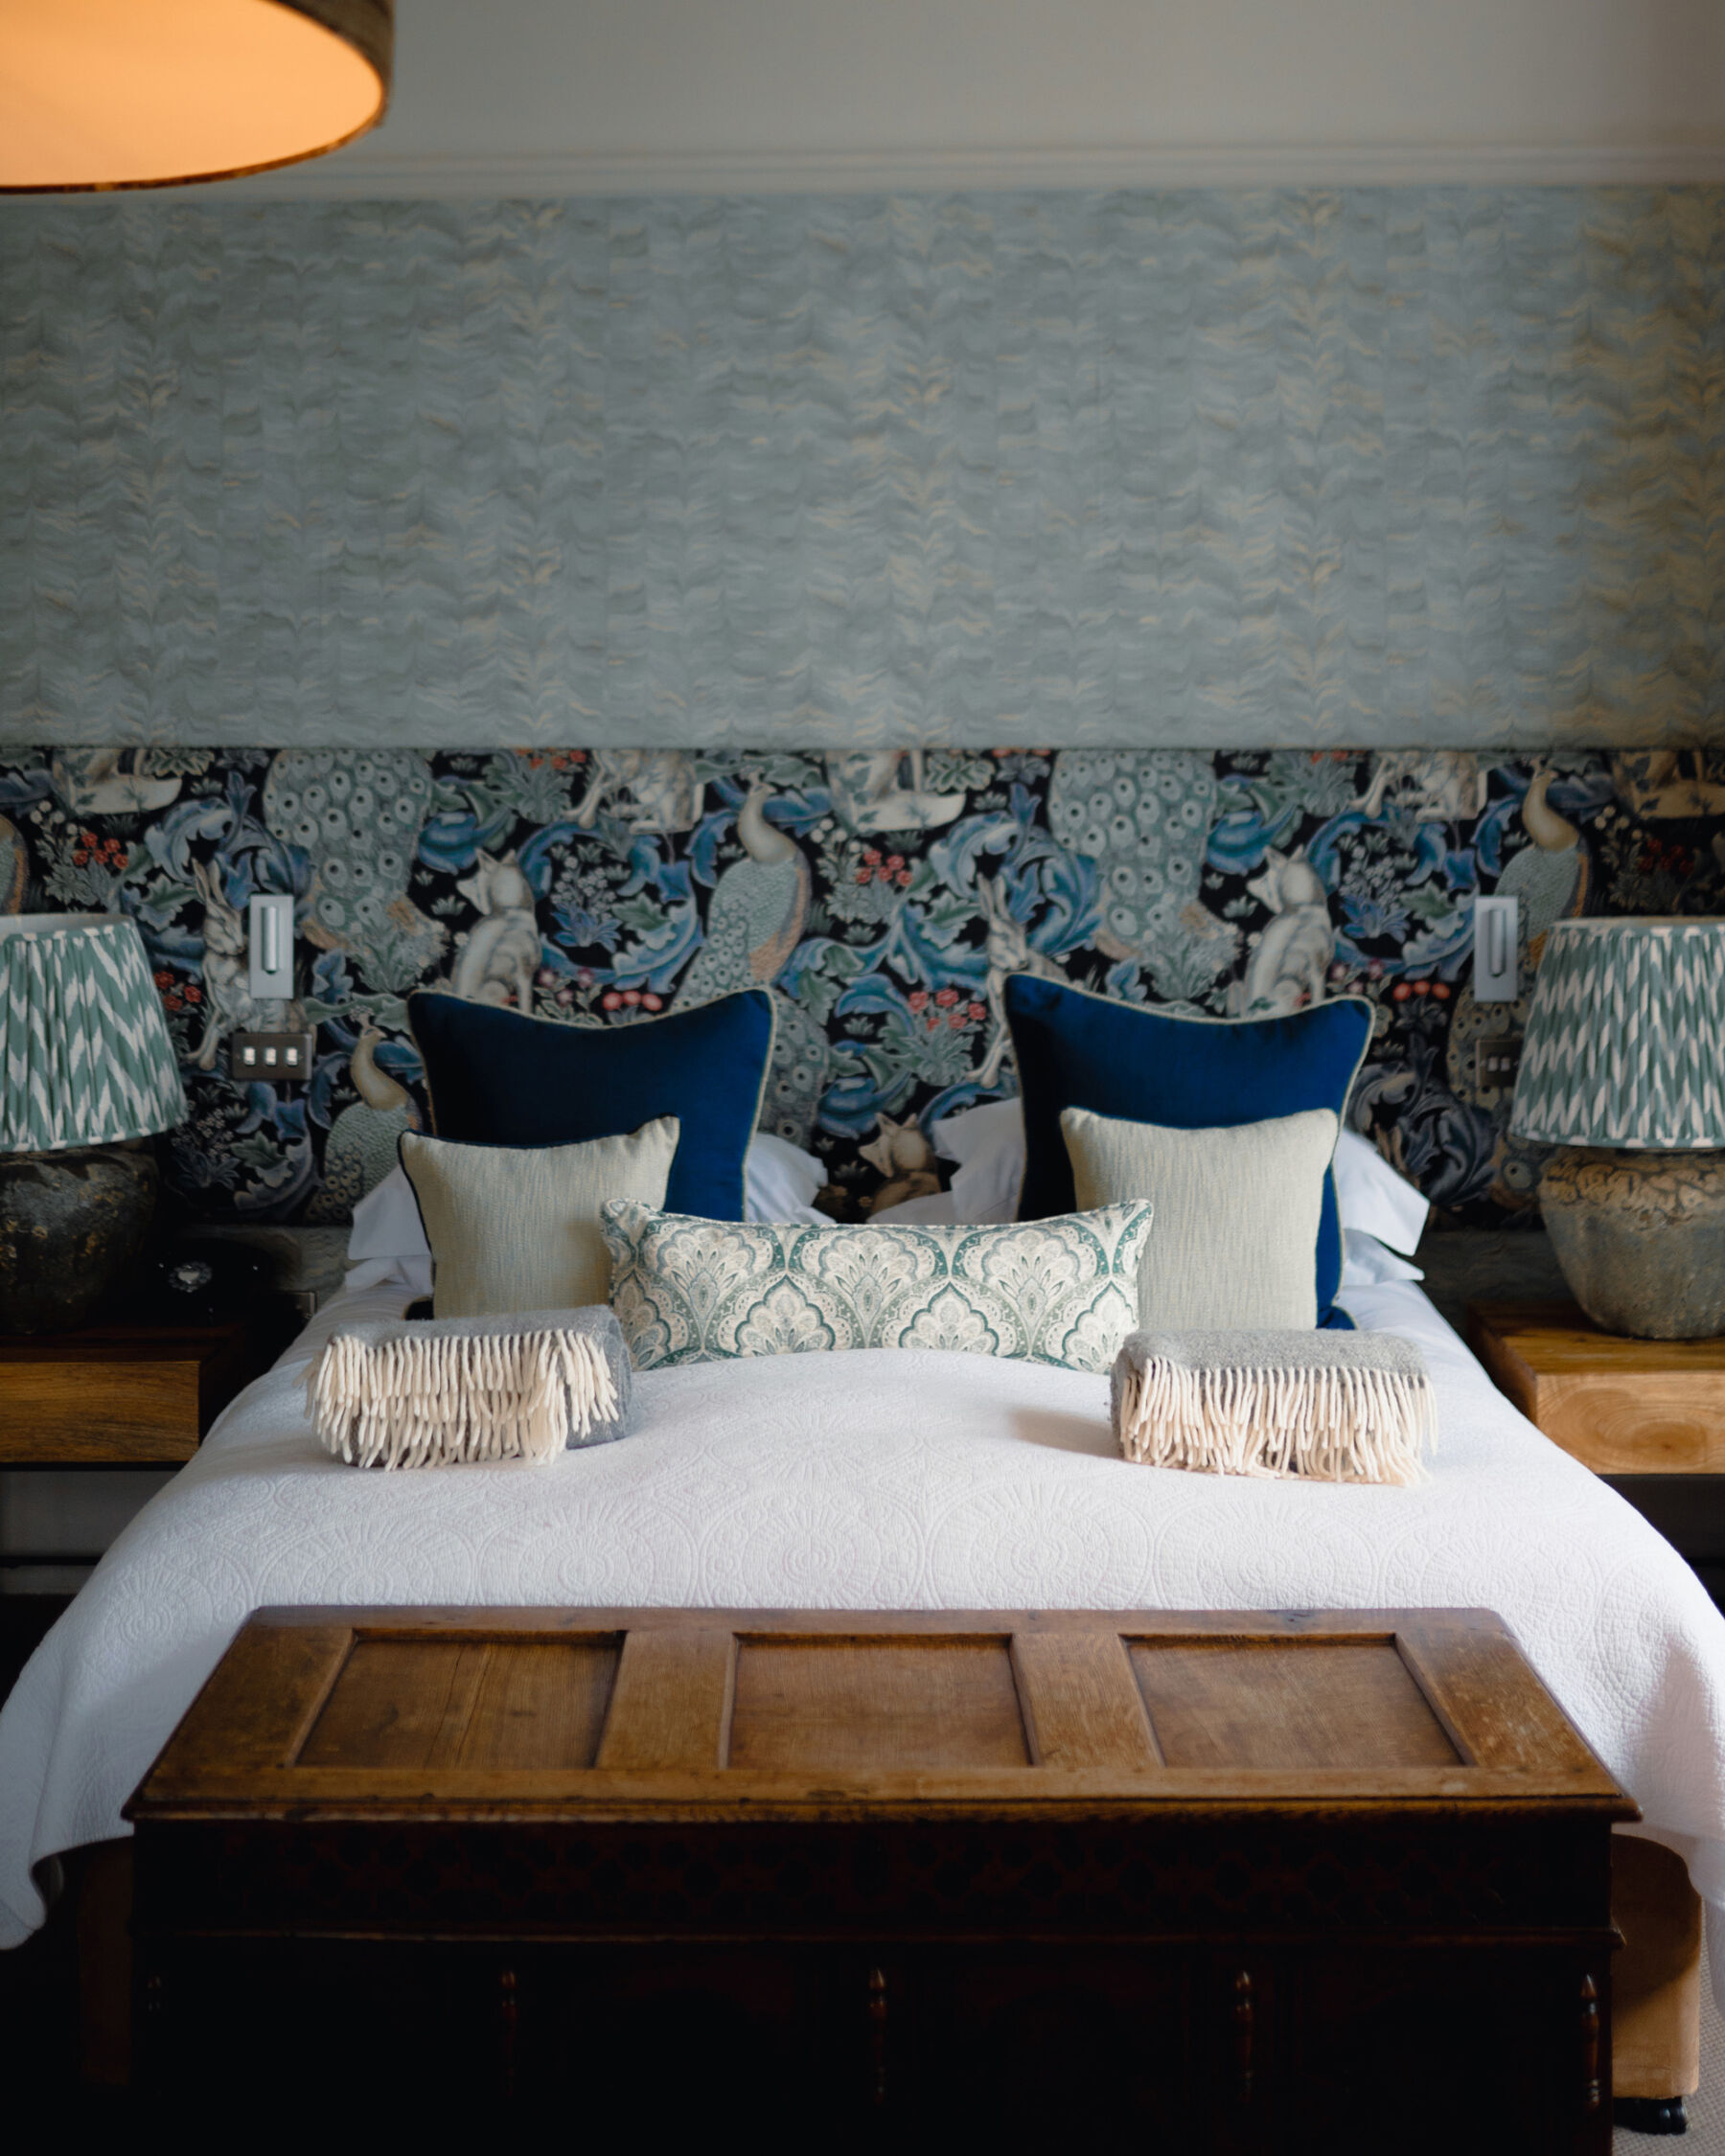 William Morris inspired bedroom and interiors at Hampton M anor.